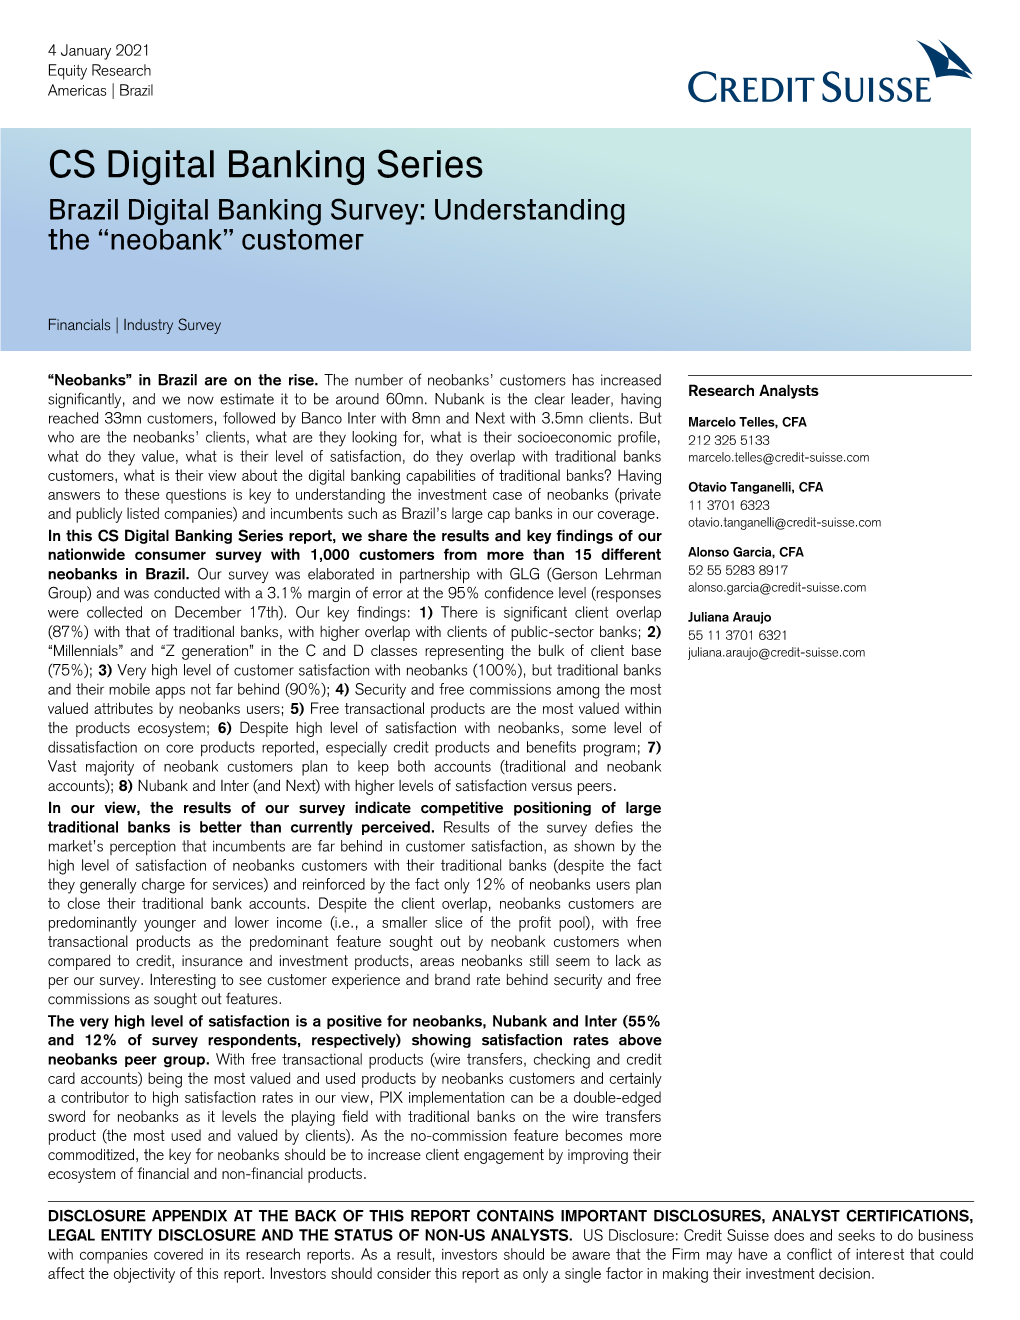 CS Digital Banking Series Brazil Digital Banking Survey: Understanding the “Neobank” Customer